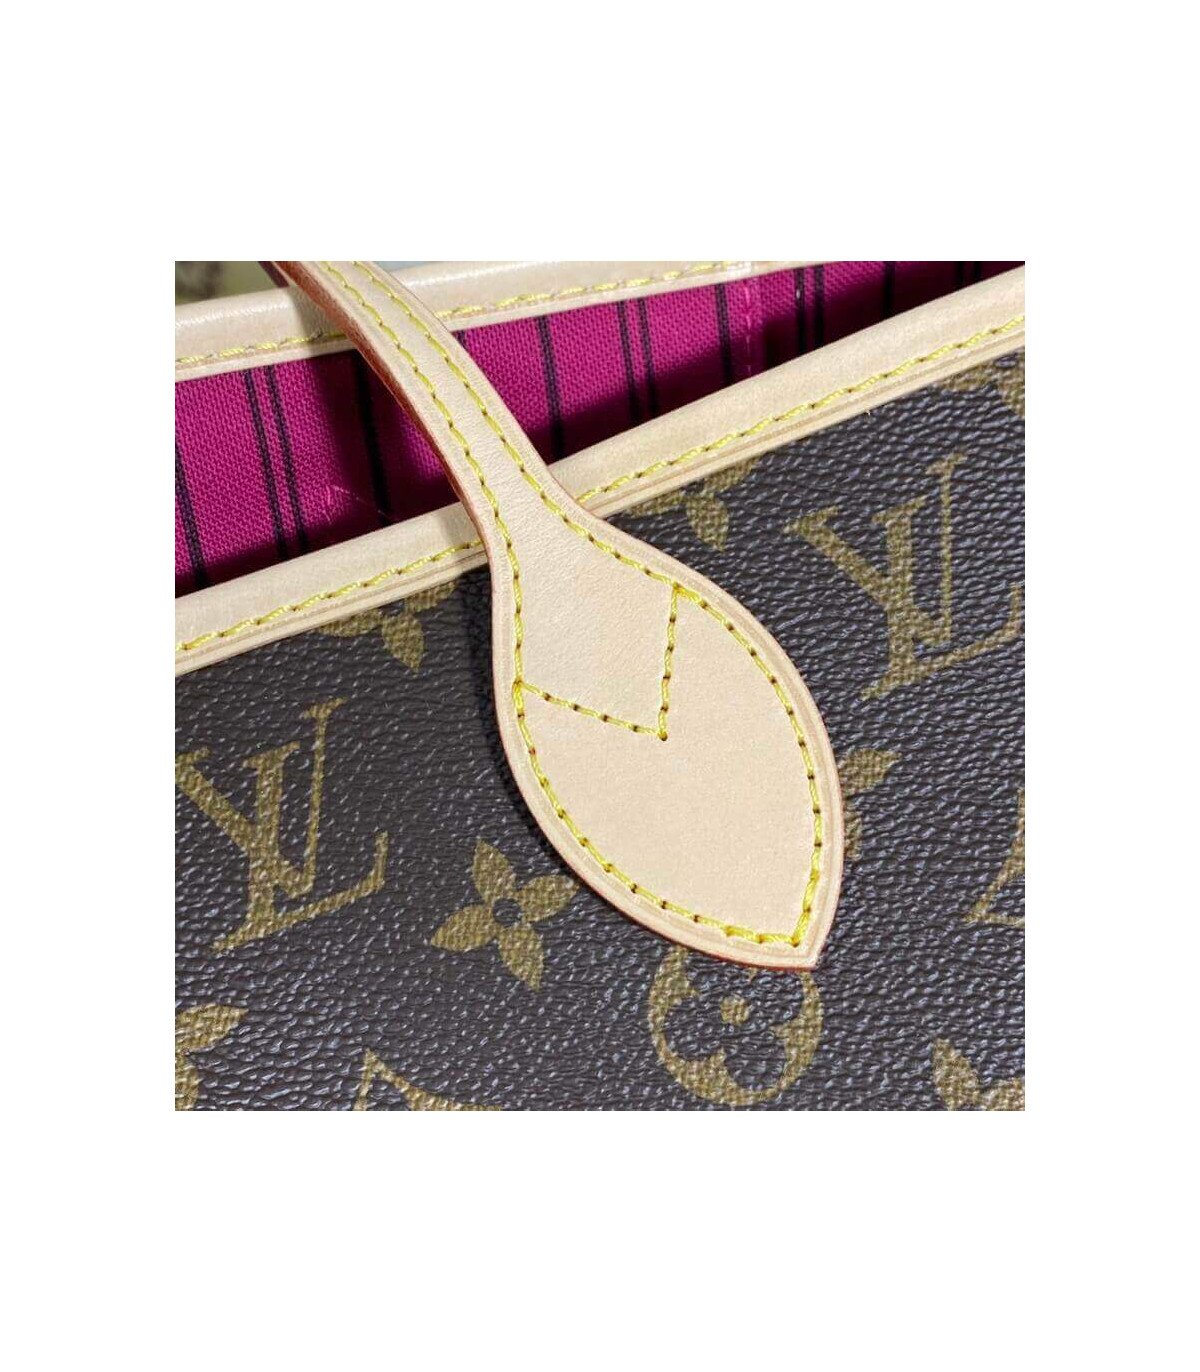 Shop Louis Vuitton MONOGRAM Neverfull mm (M41178, M41177, M40995) by  iRodori03